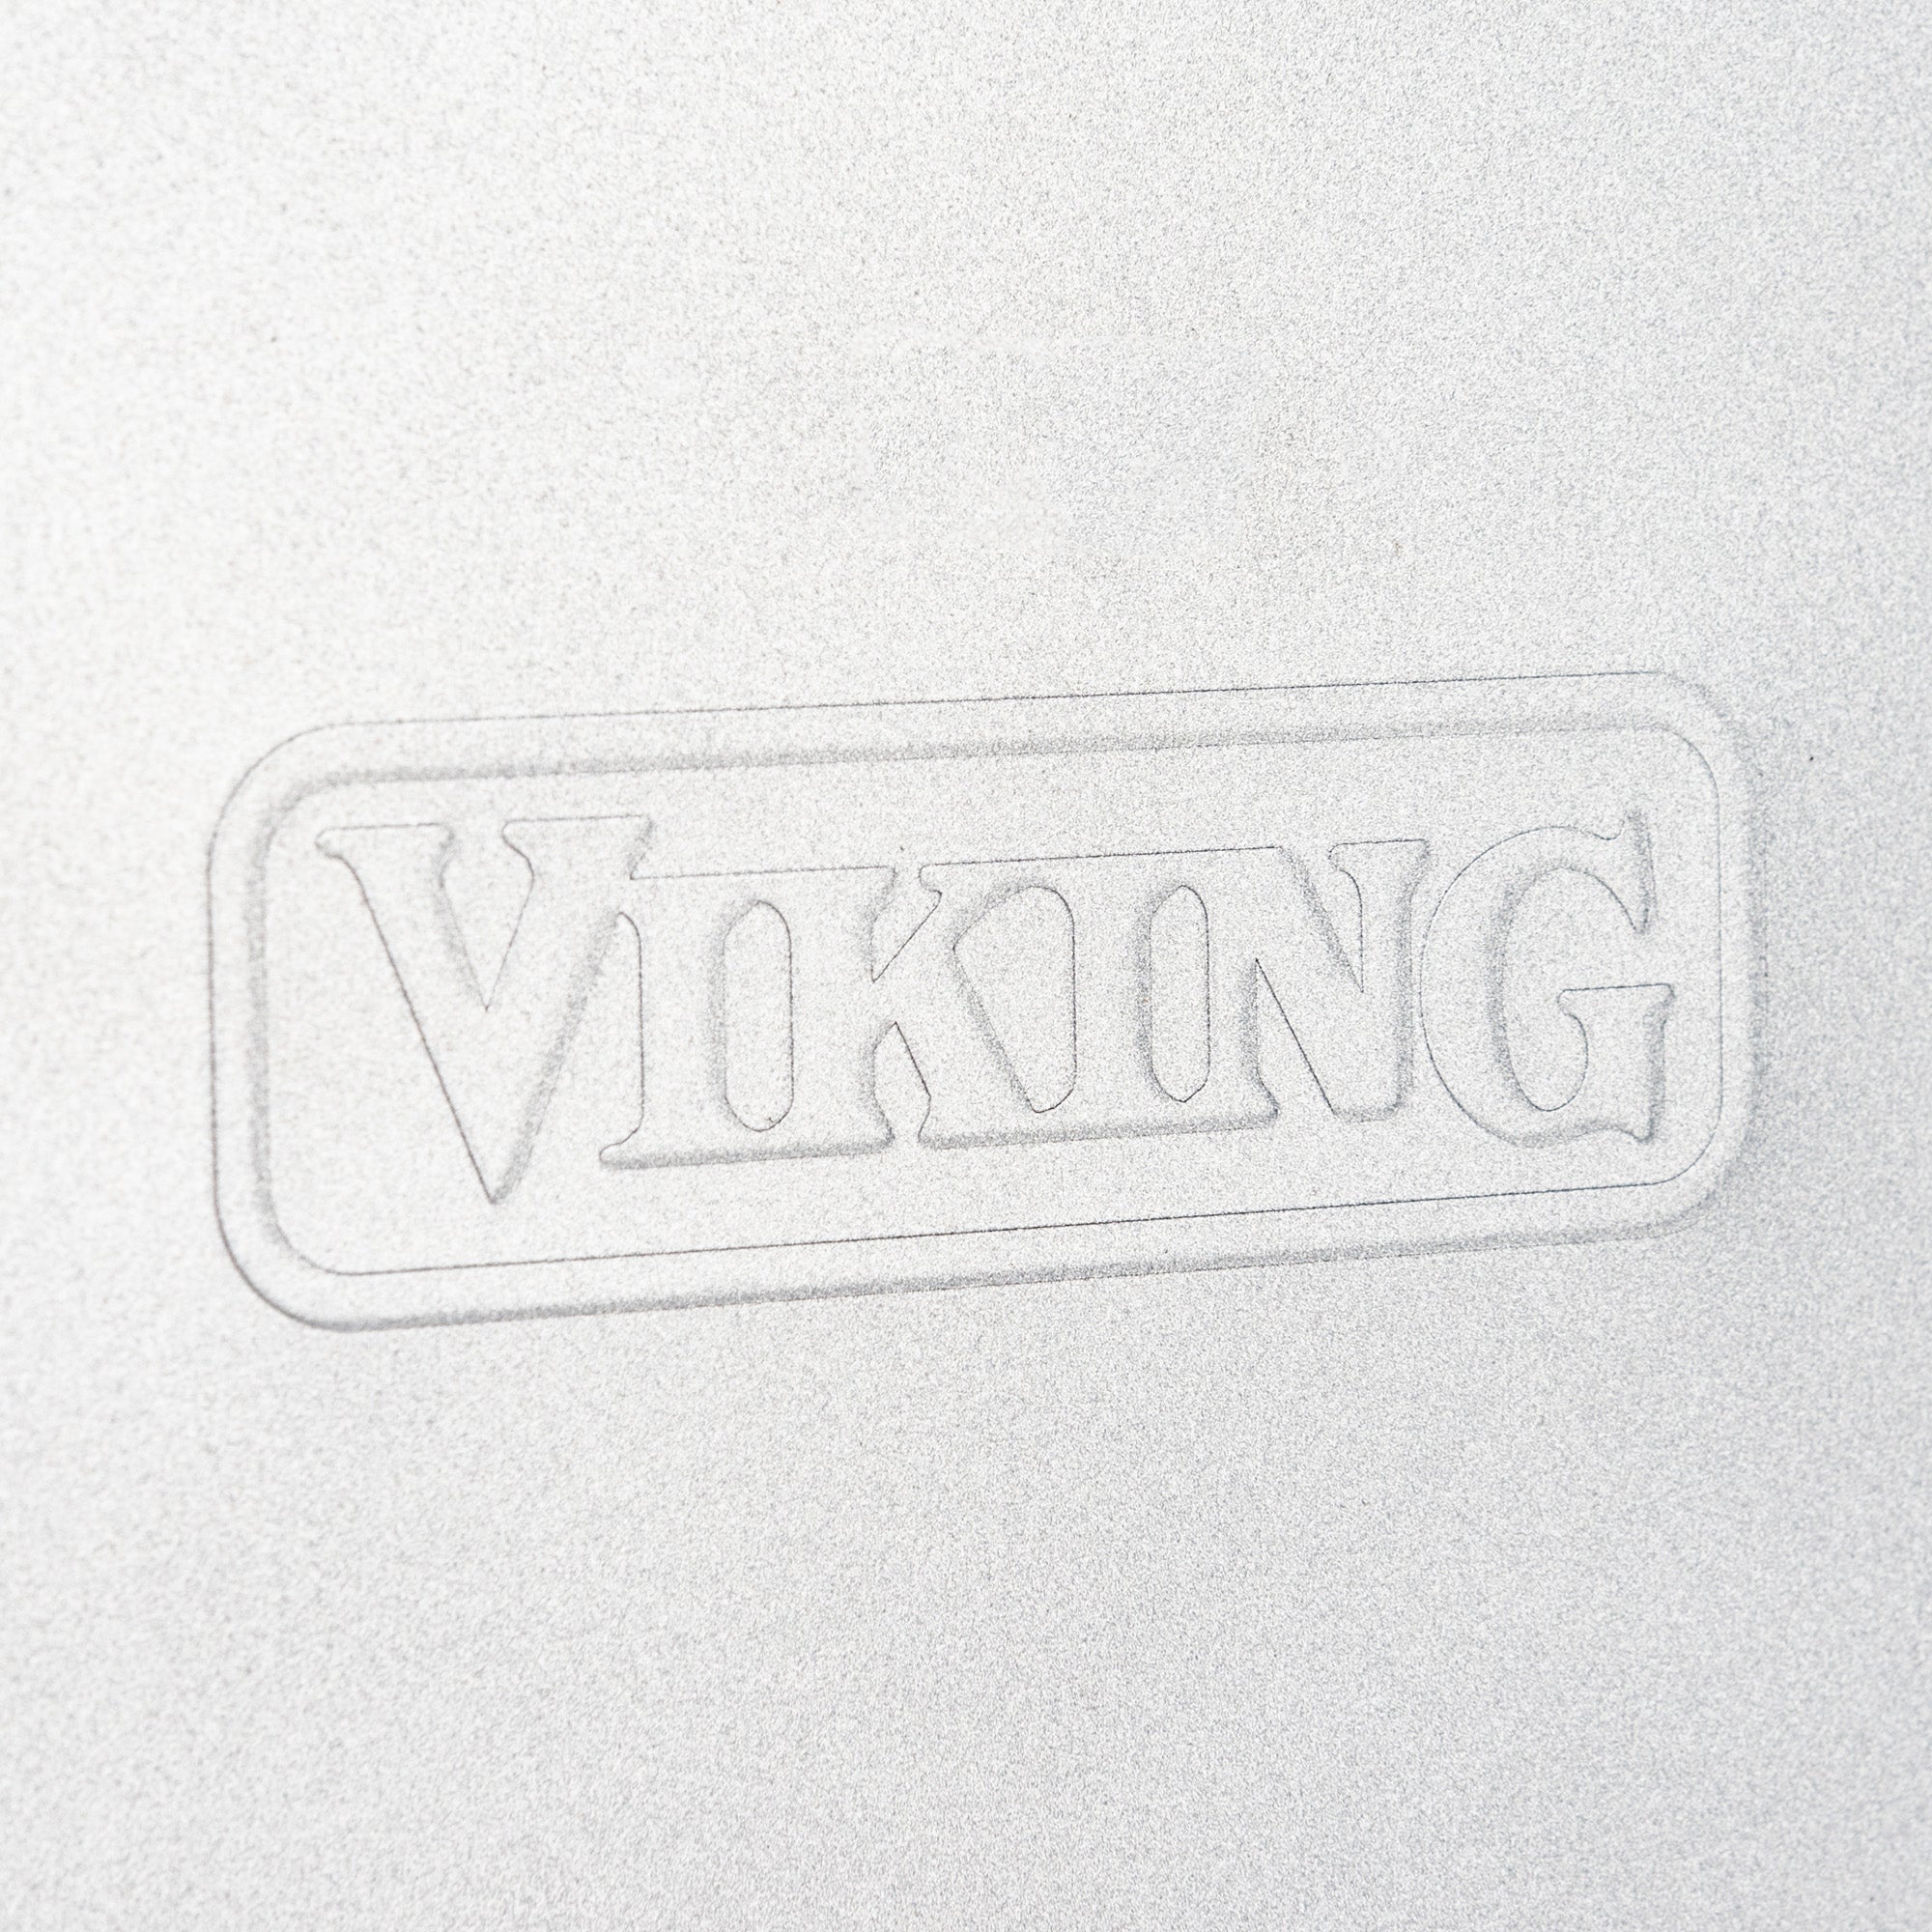 Viking 2-Piece Nonstick Aluminized Steel Baking Sheet Set